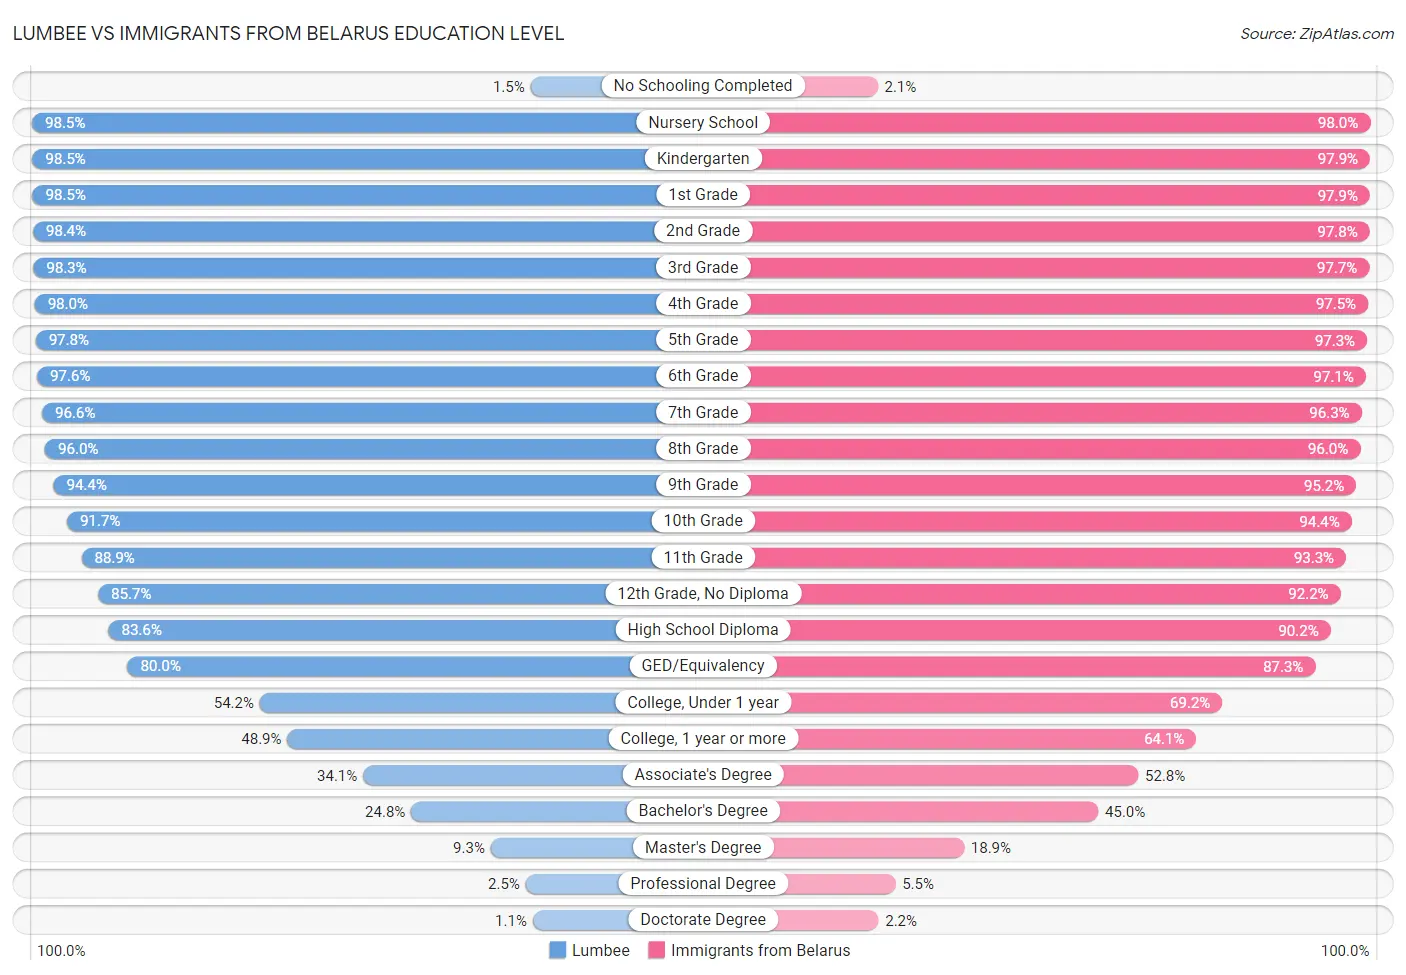 Lumbee vs Immigrants from Belarus Education Level